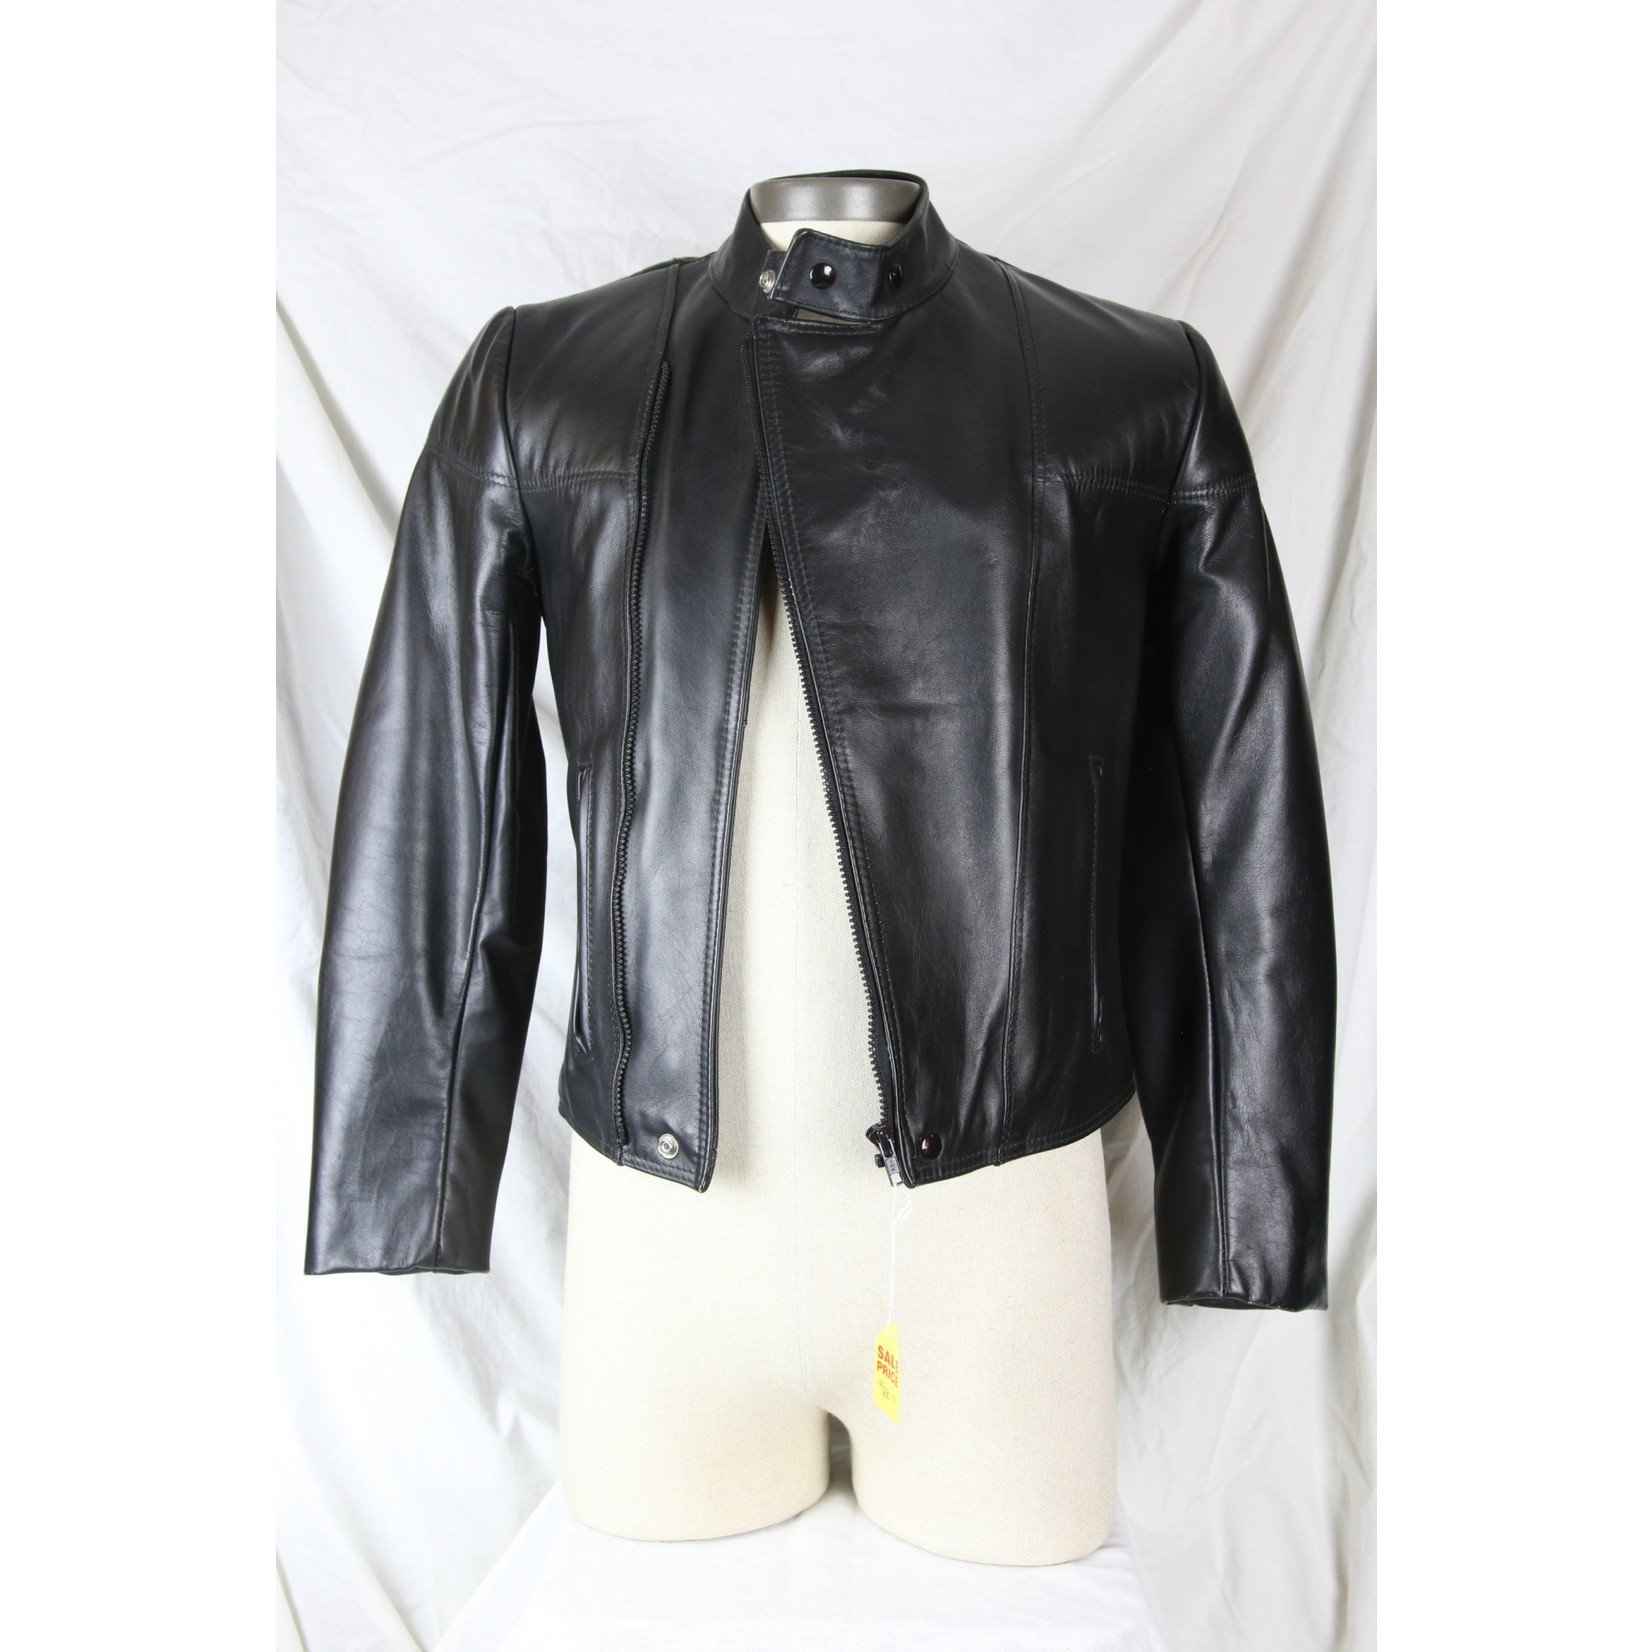 Bristol Men’s Leather Black Biker Jacket Right Side Zip 1044